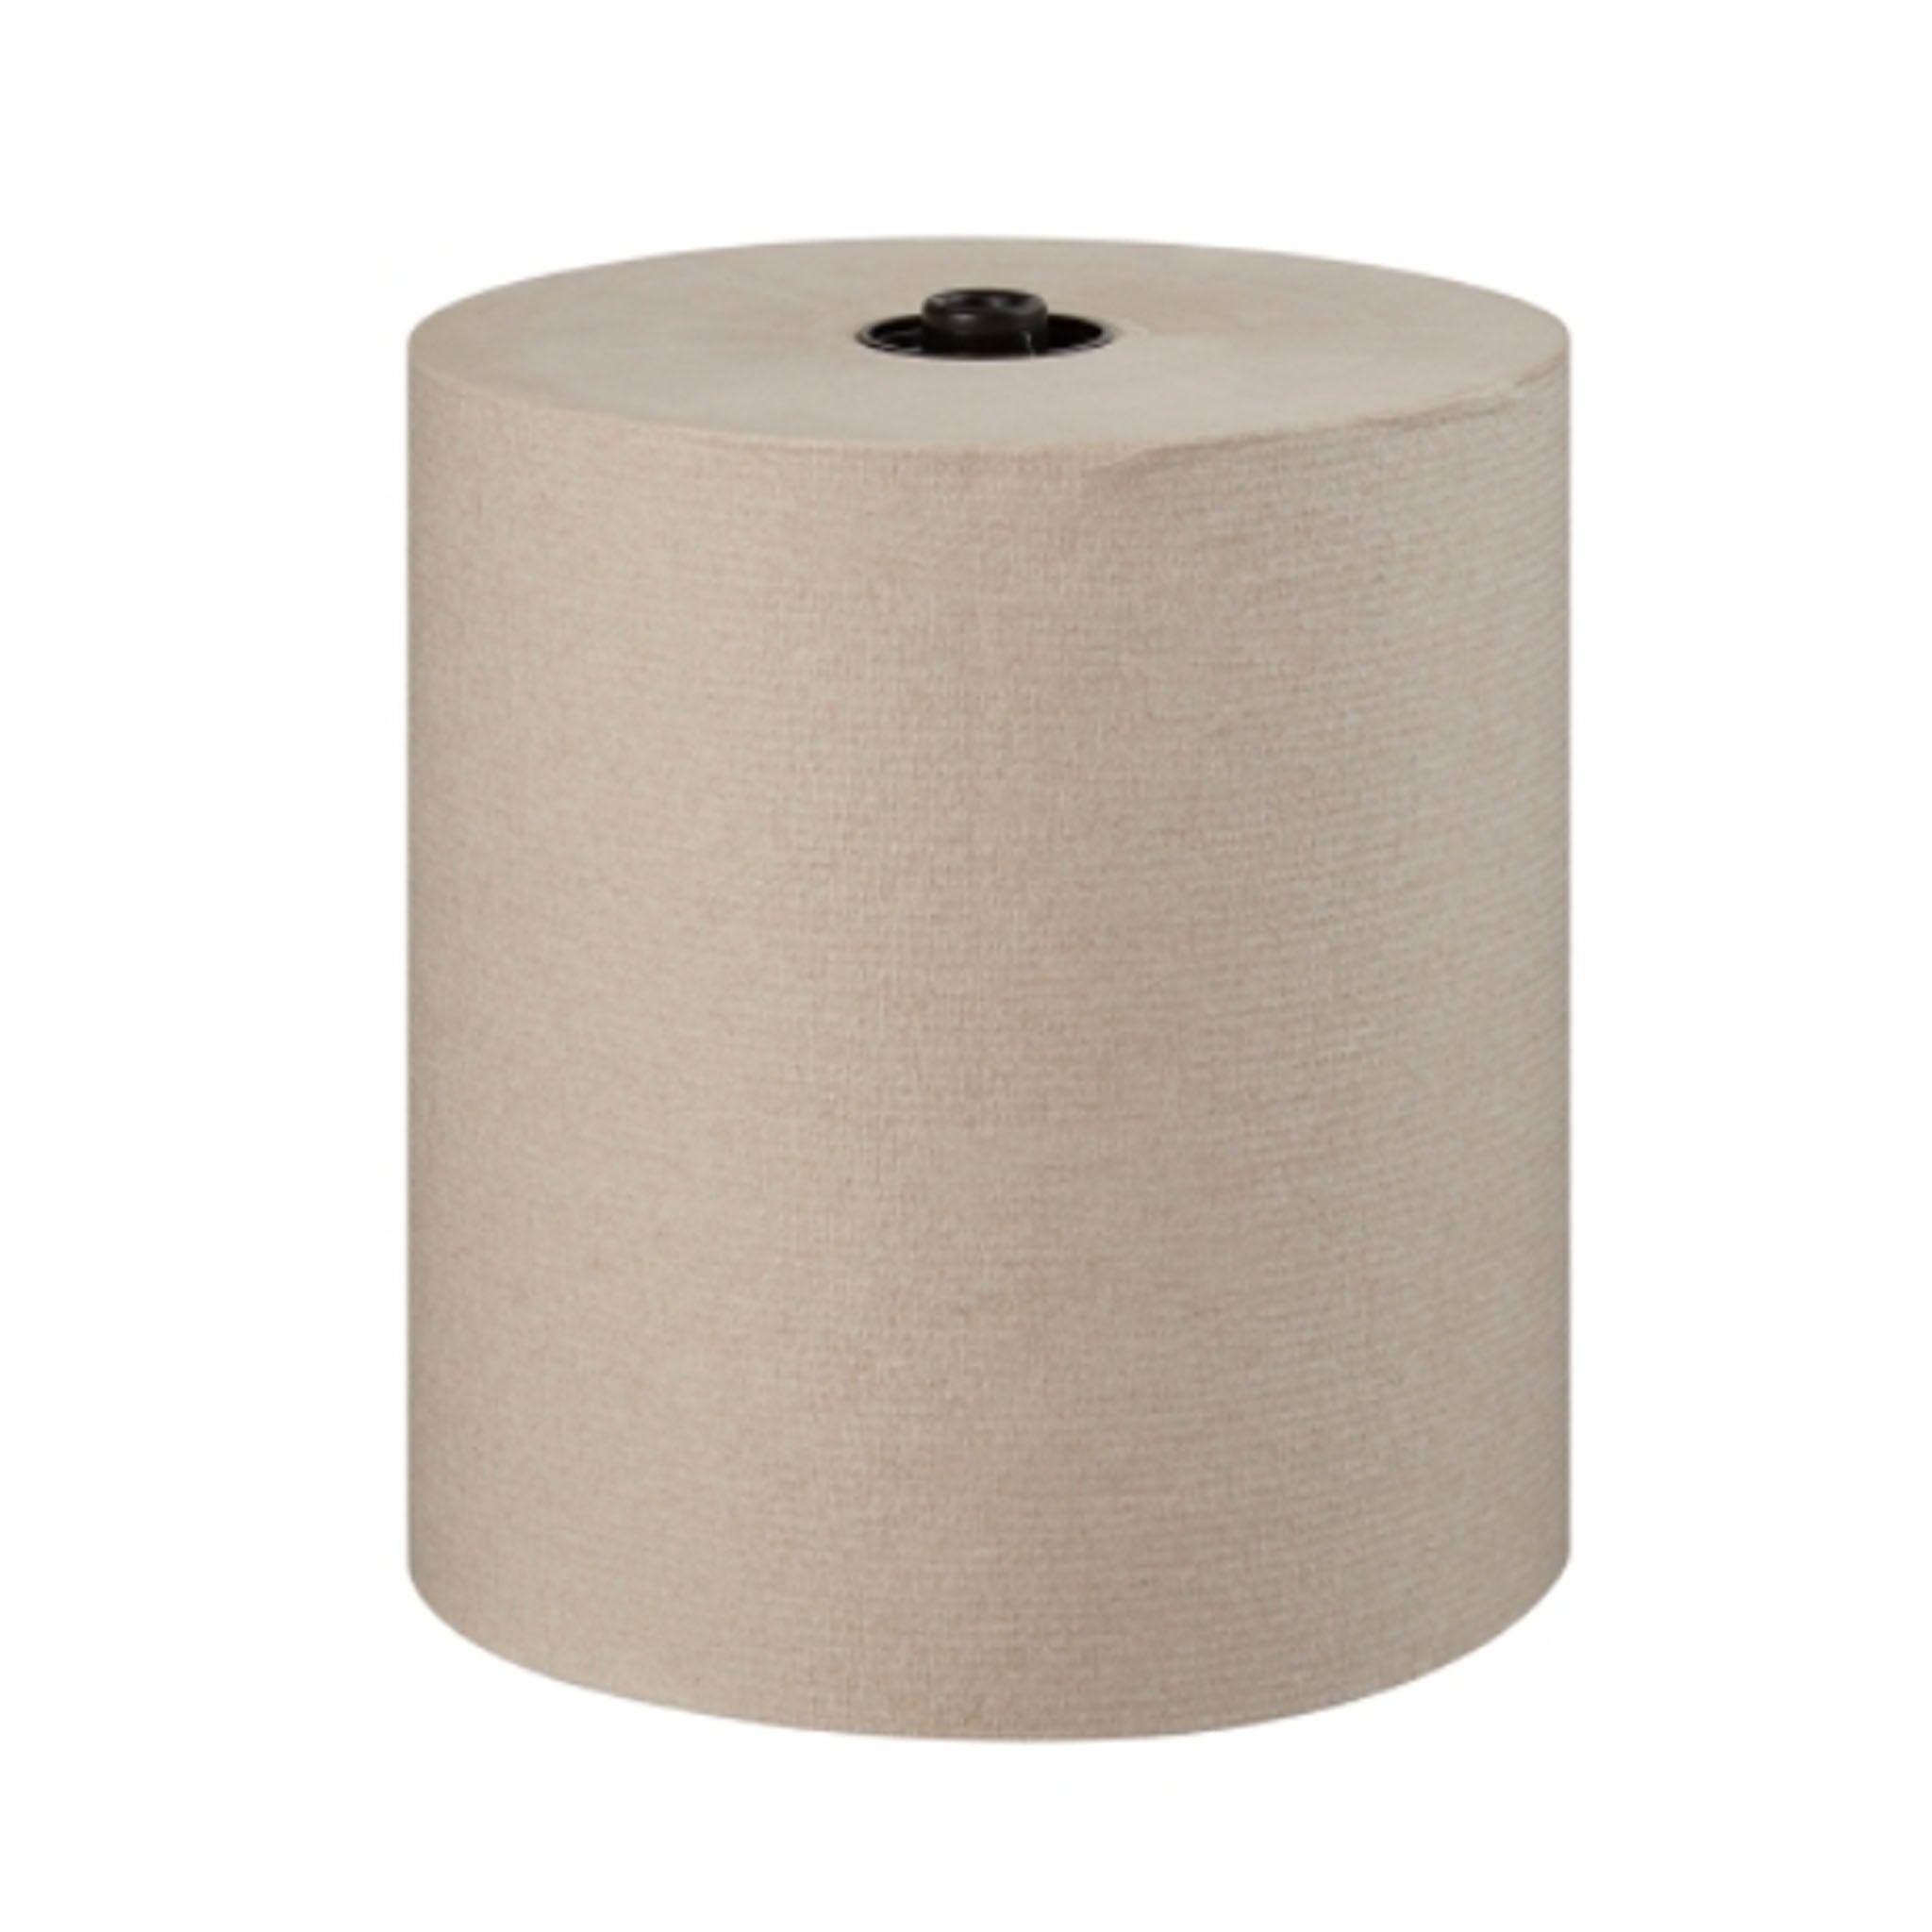 Paper Towel enMotion Hardwound Roll